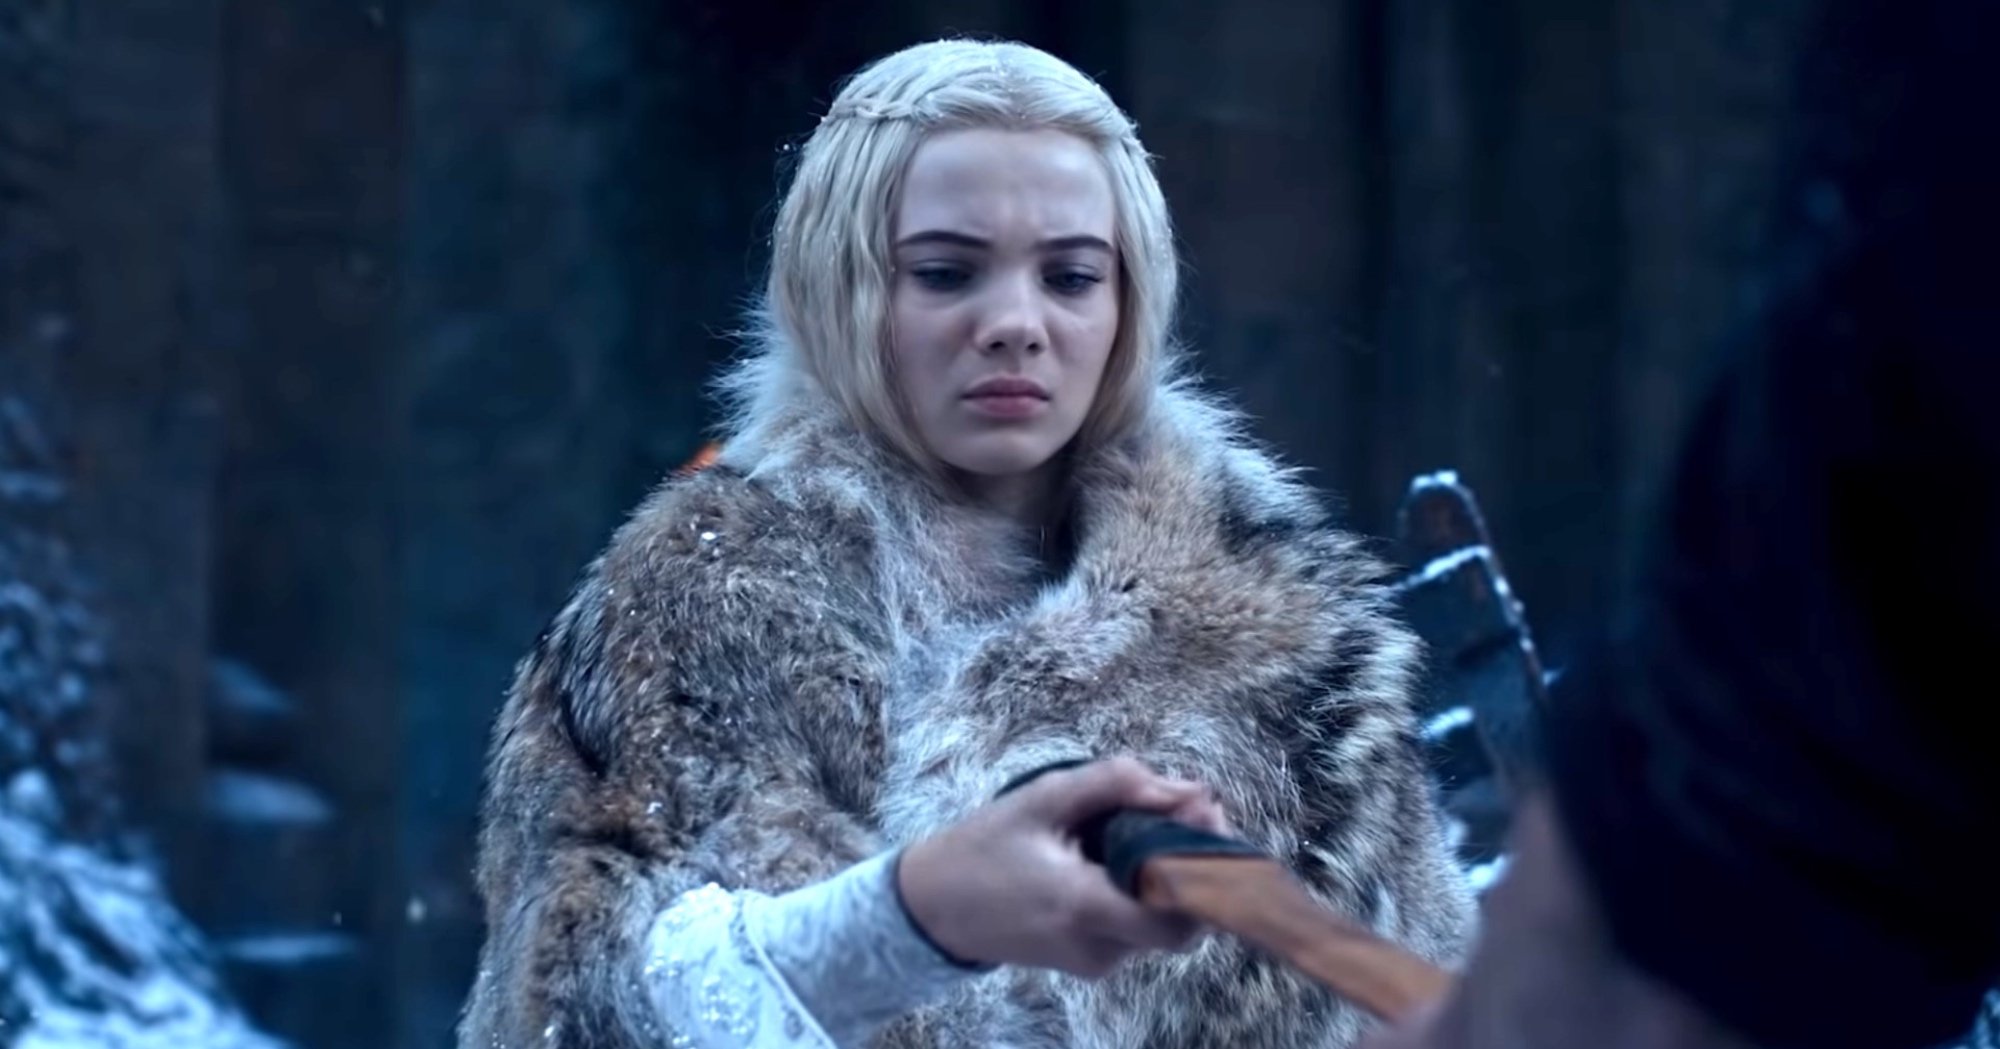 Ciri, played by Freya Allan, in 'The Witcher' Season 2 still wearing a fur coat.